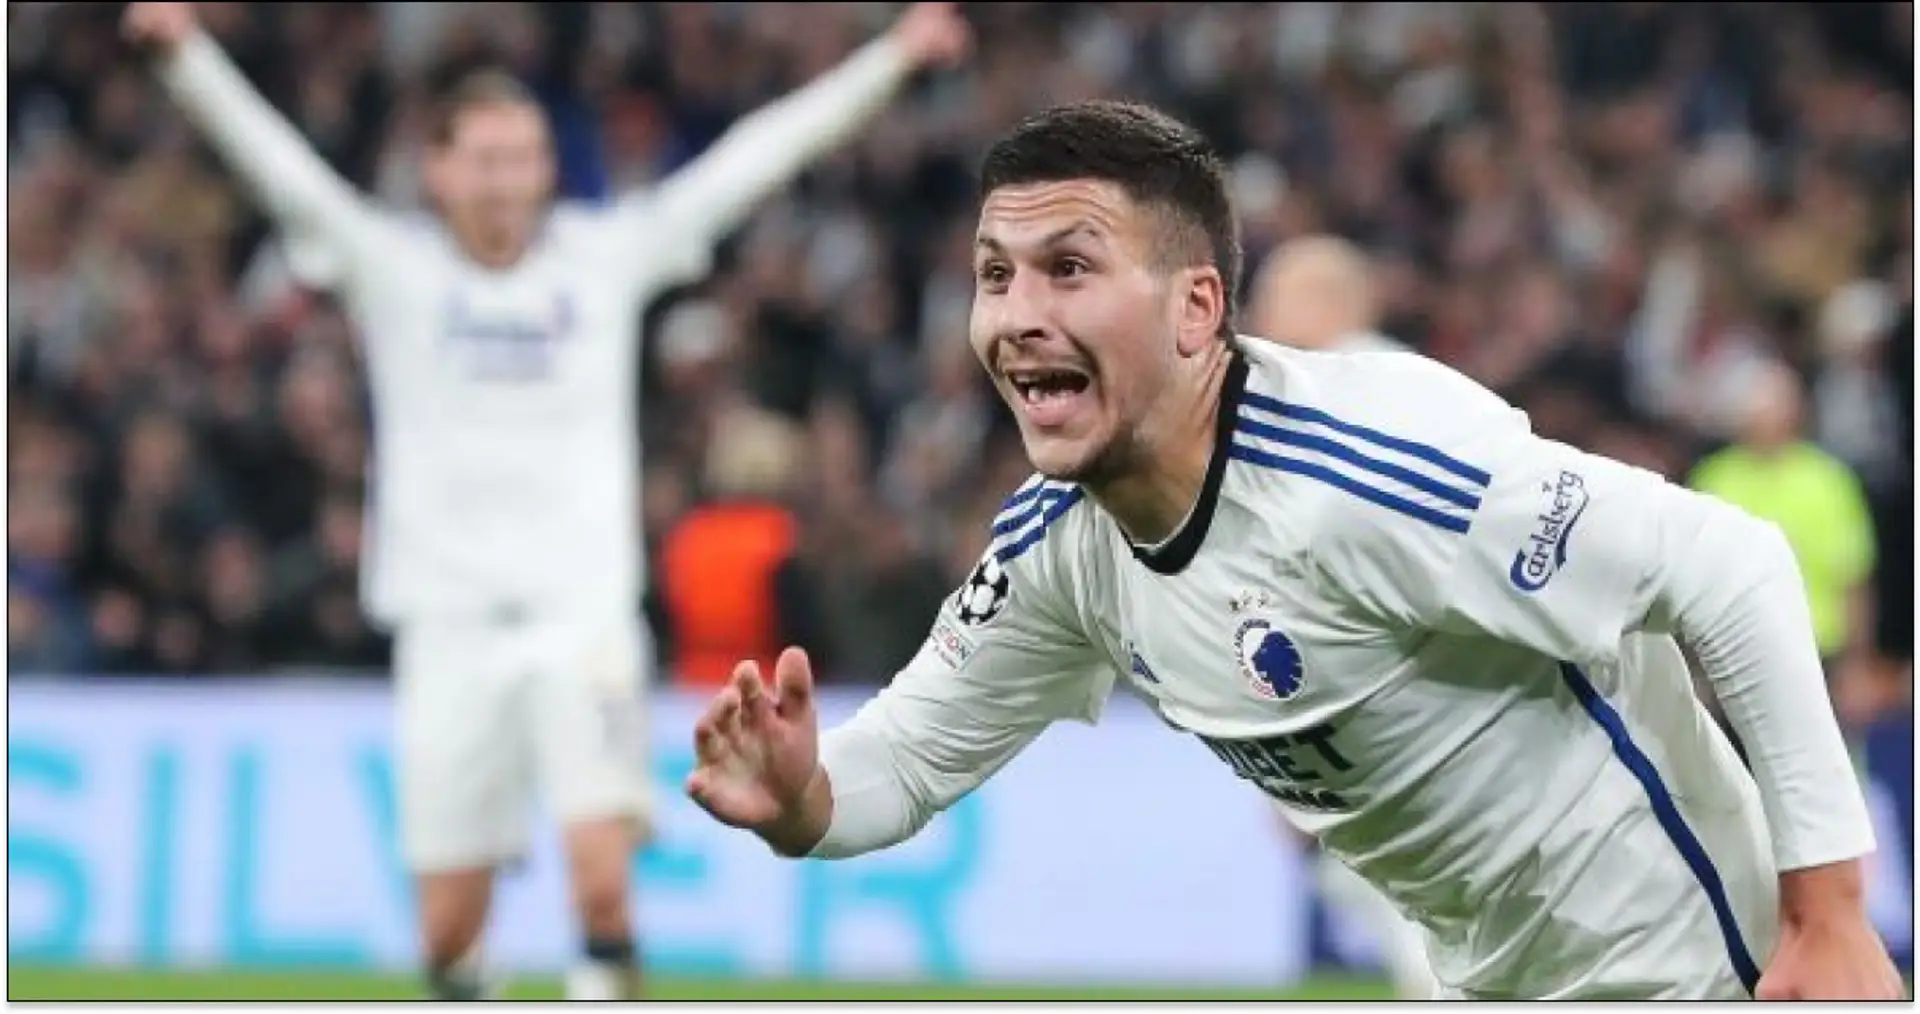 Chelsea 'crazy' about 17-year-old Copenhagen forward  who scored winning goal v Man United